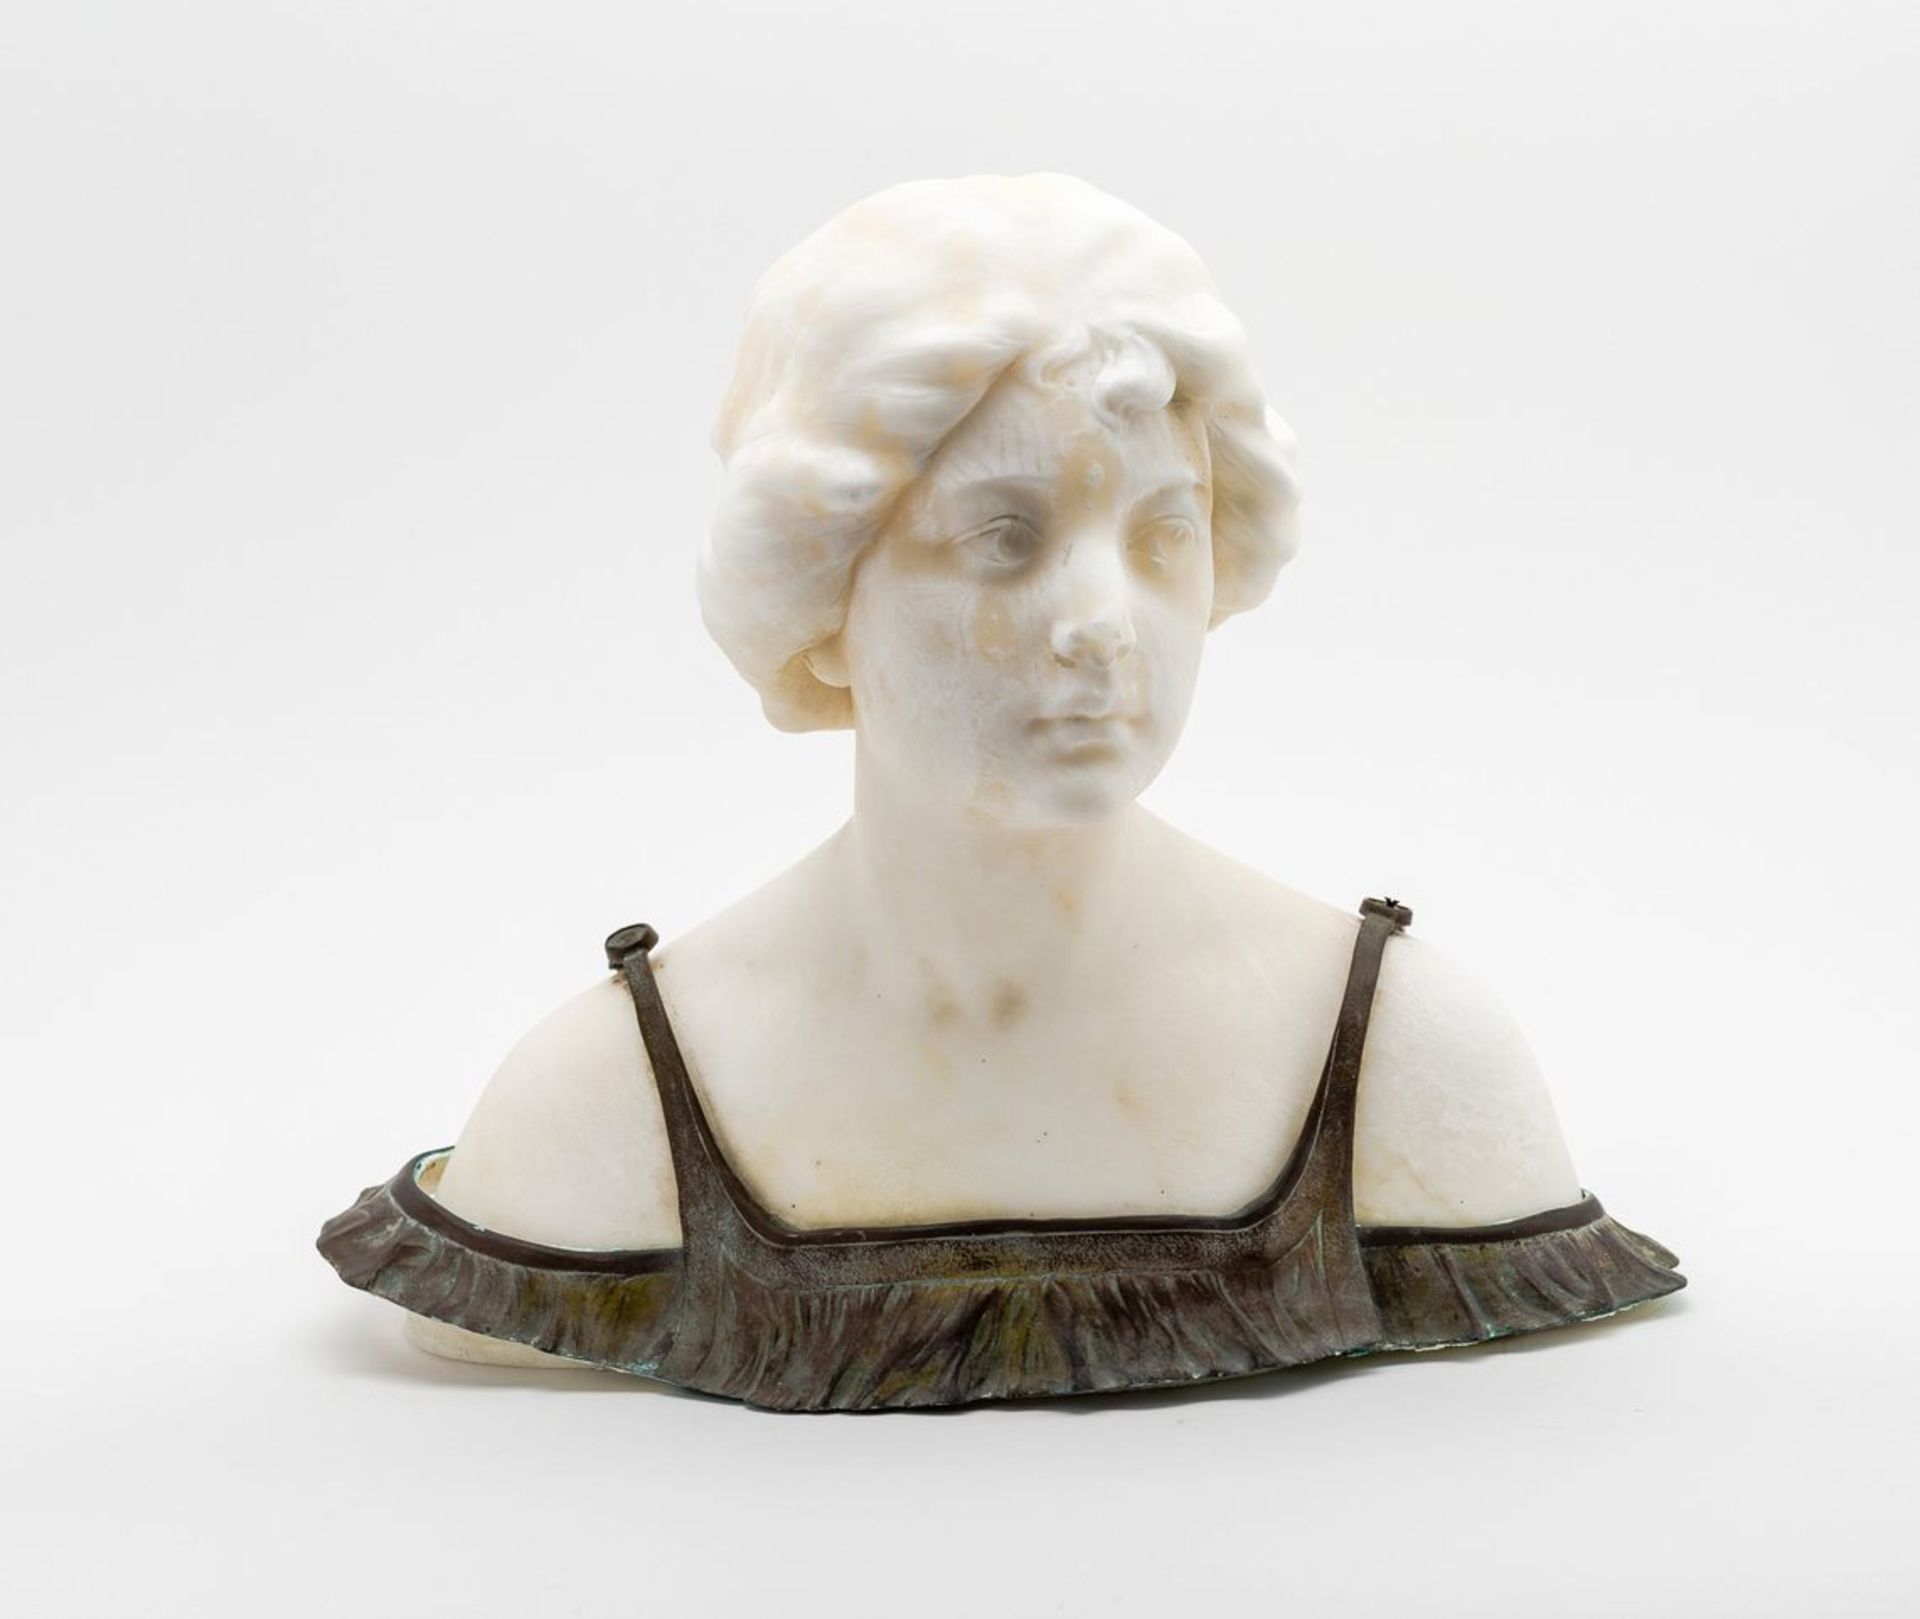 Fanfani, Saul1856 Sesto - 1919 Florenz. "Charme". Büste einer jungen Dame. Alabaster, Messingmontur.